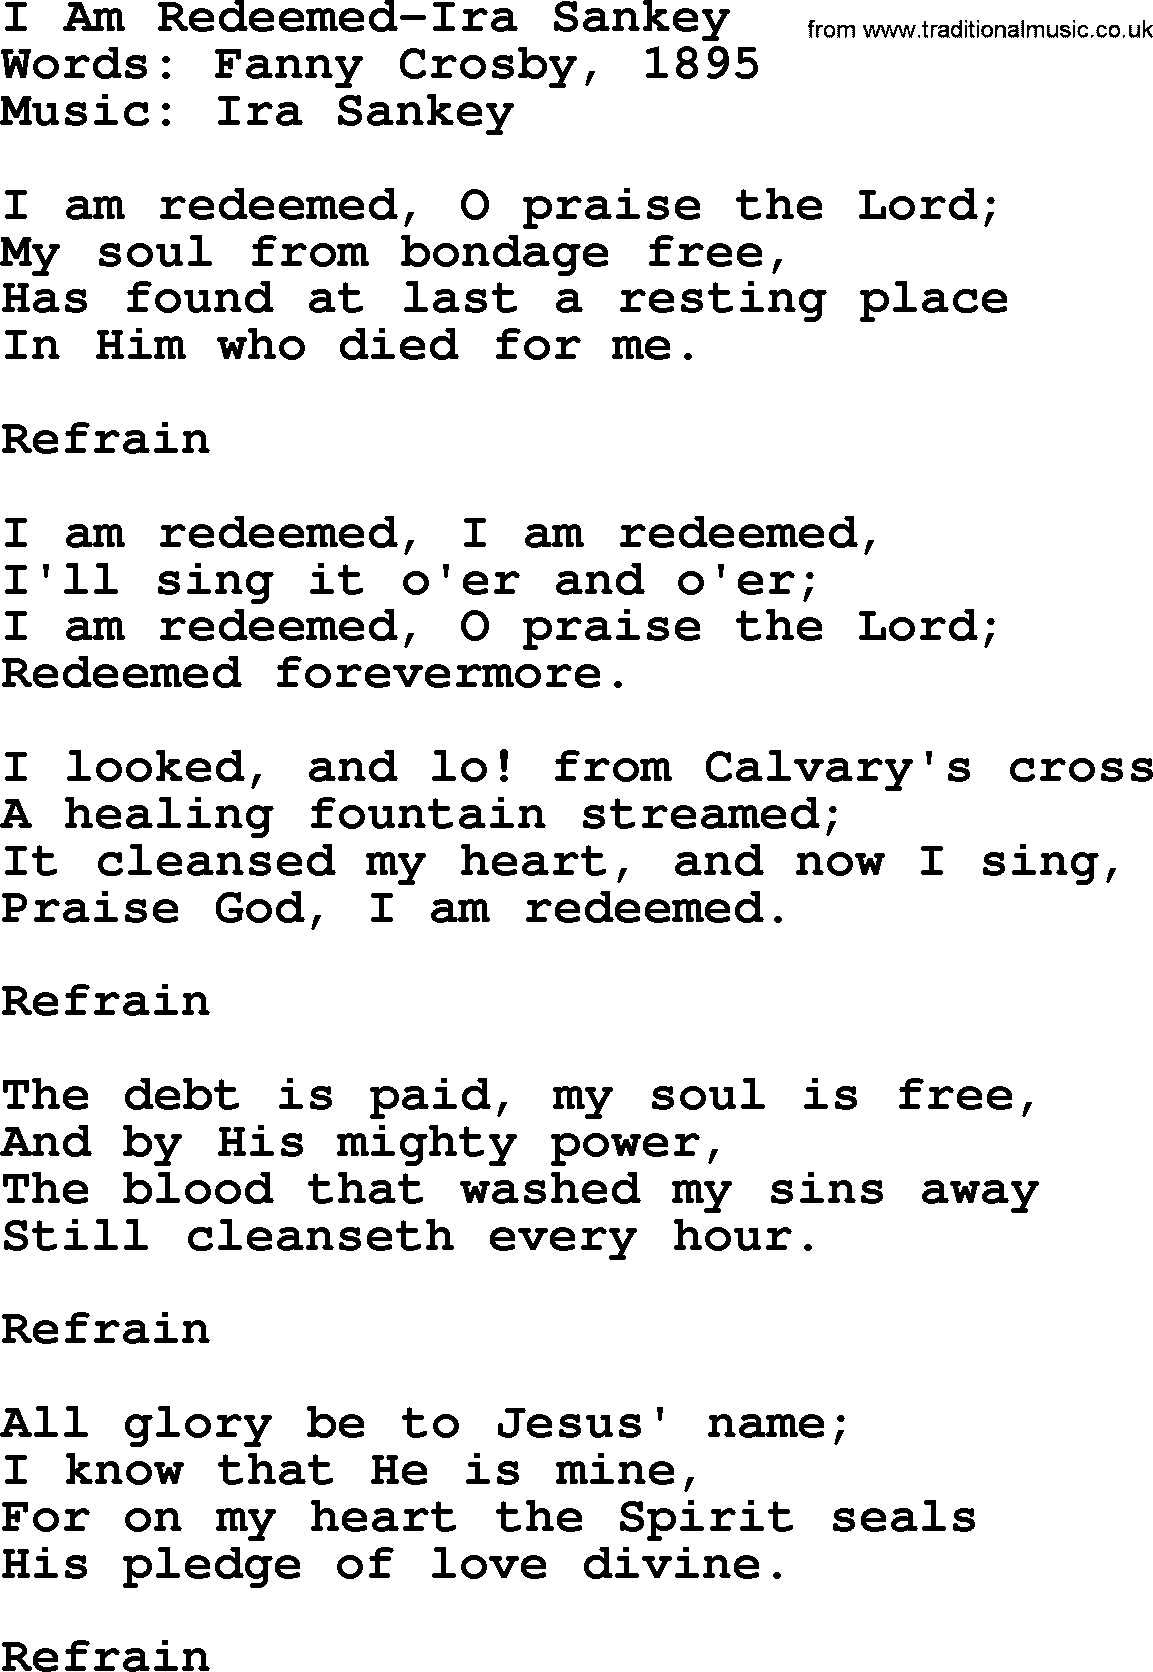 Ira Sankey hymn: I Am Redeemed-Ira Sankey, lyrics